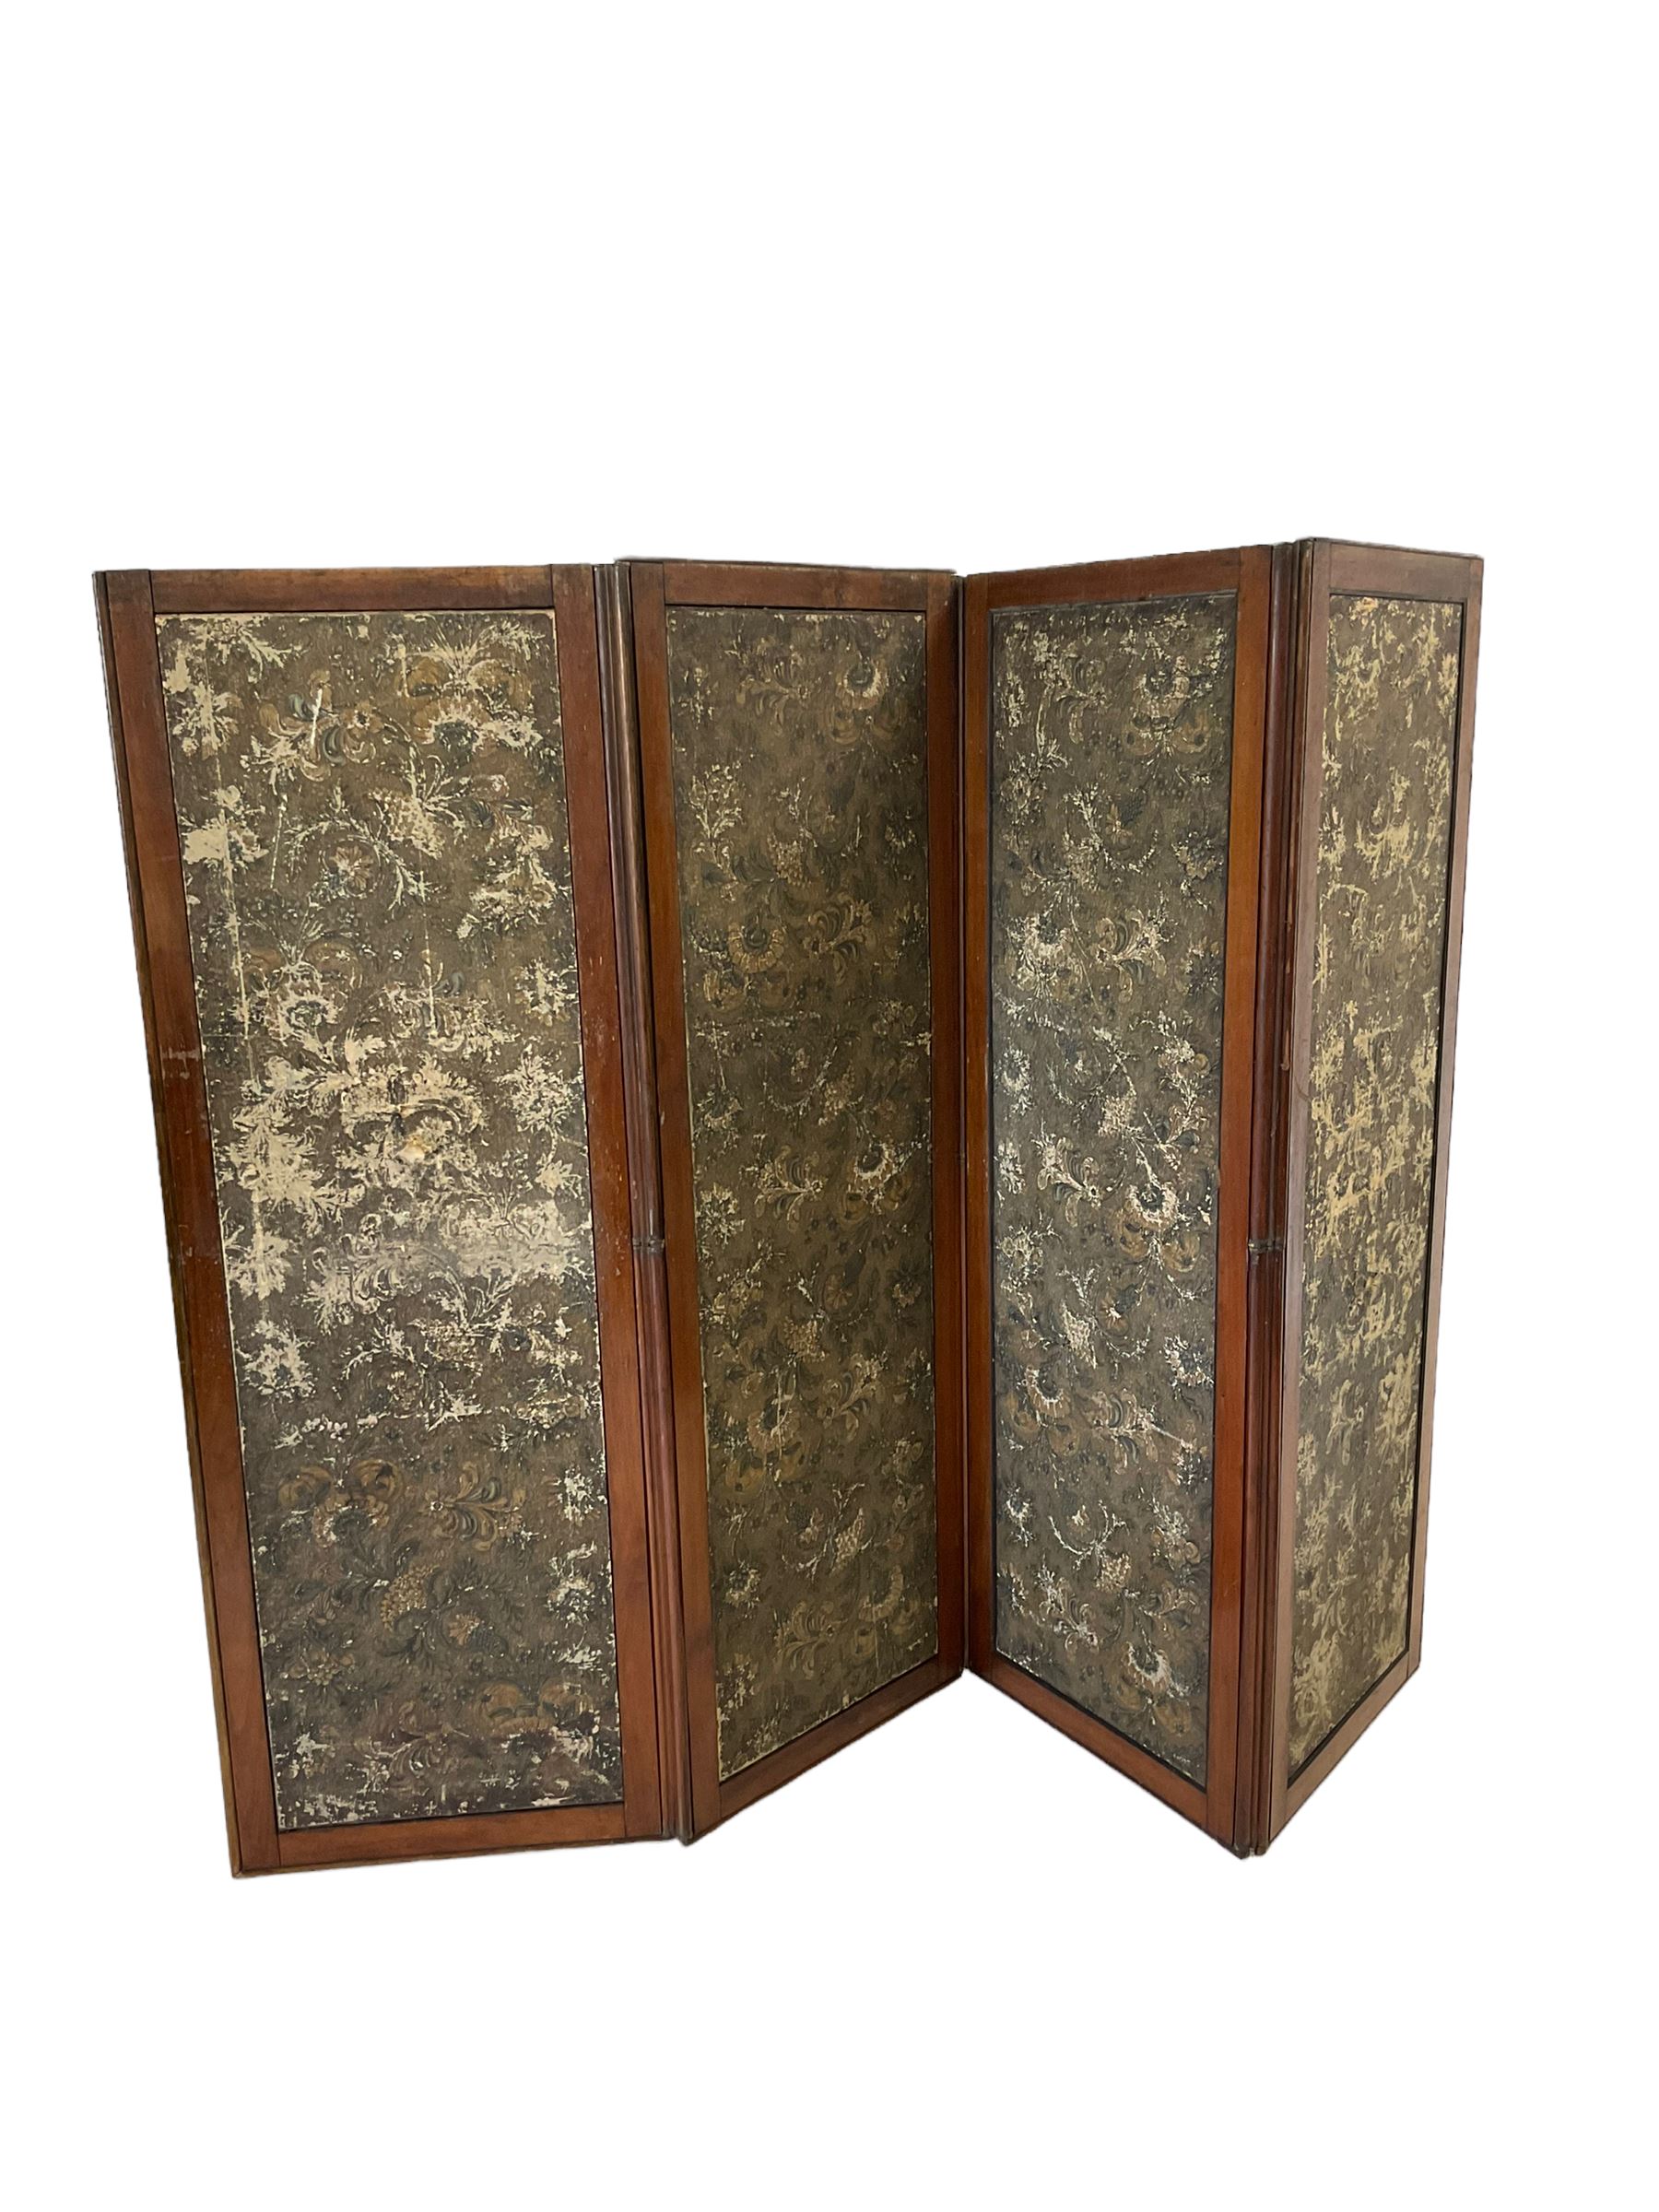 19th century walnut four panel folding screen